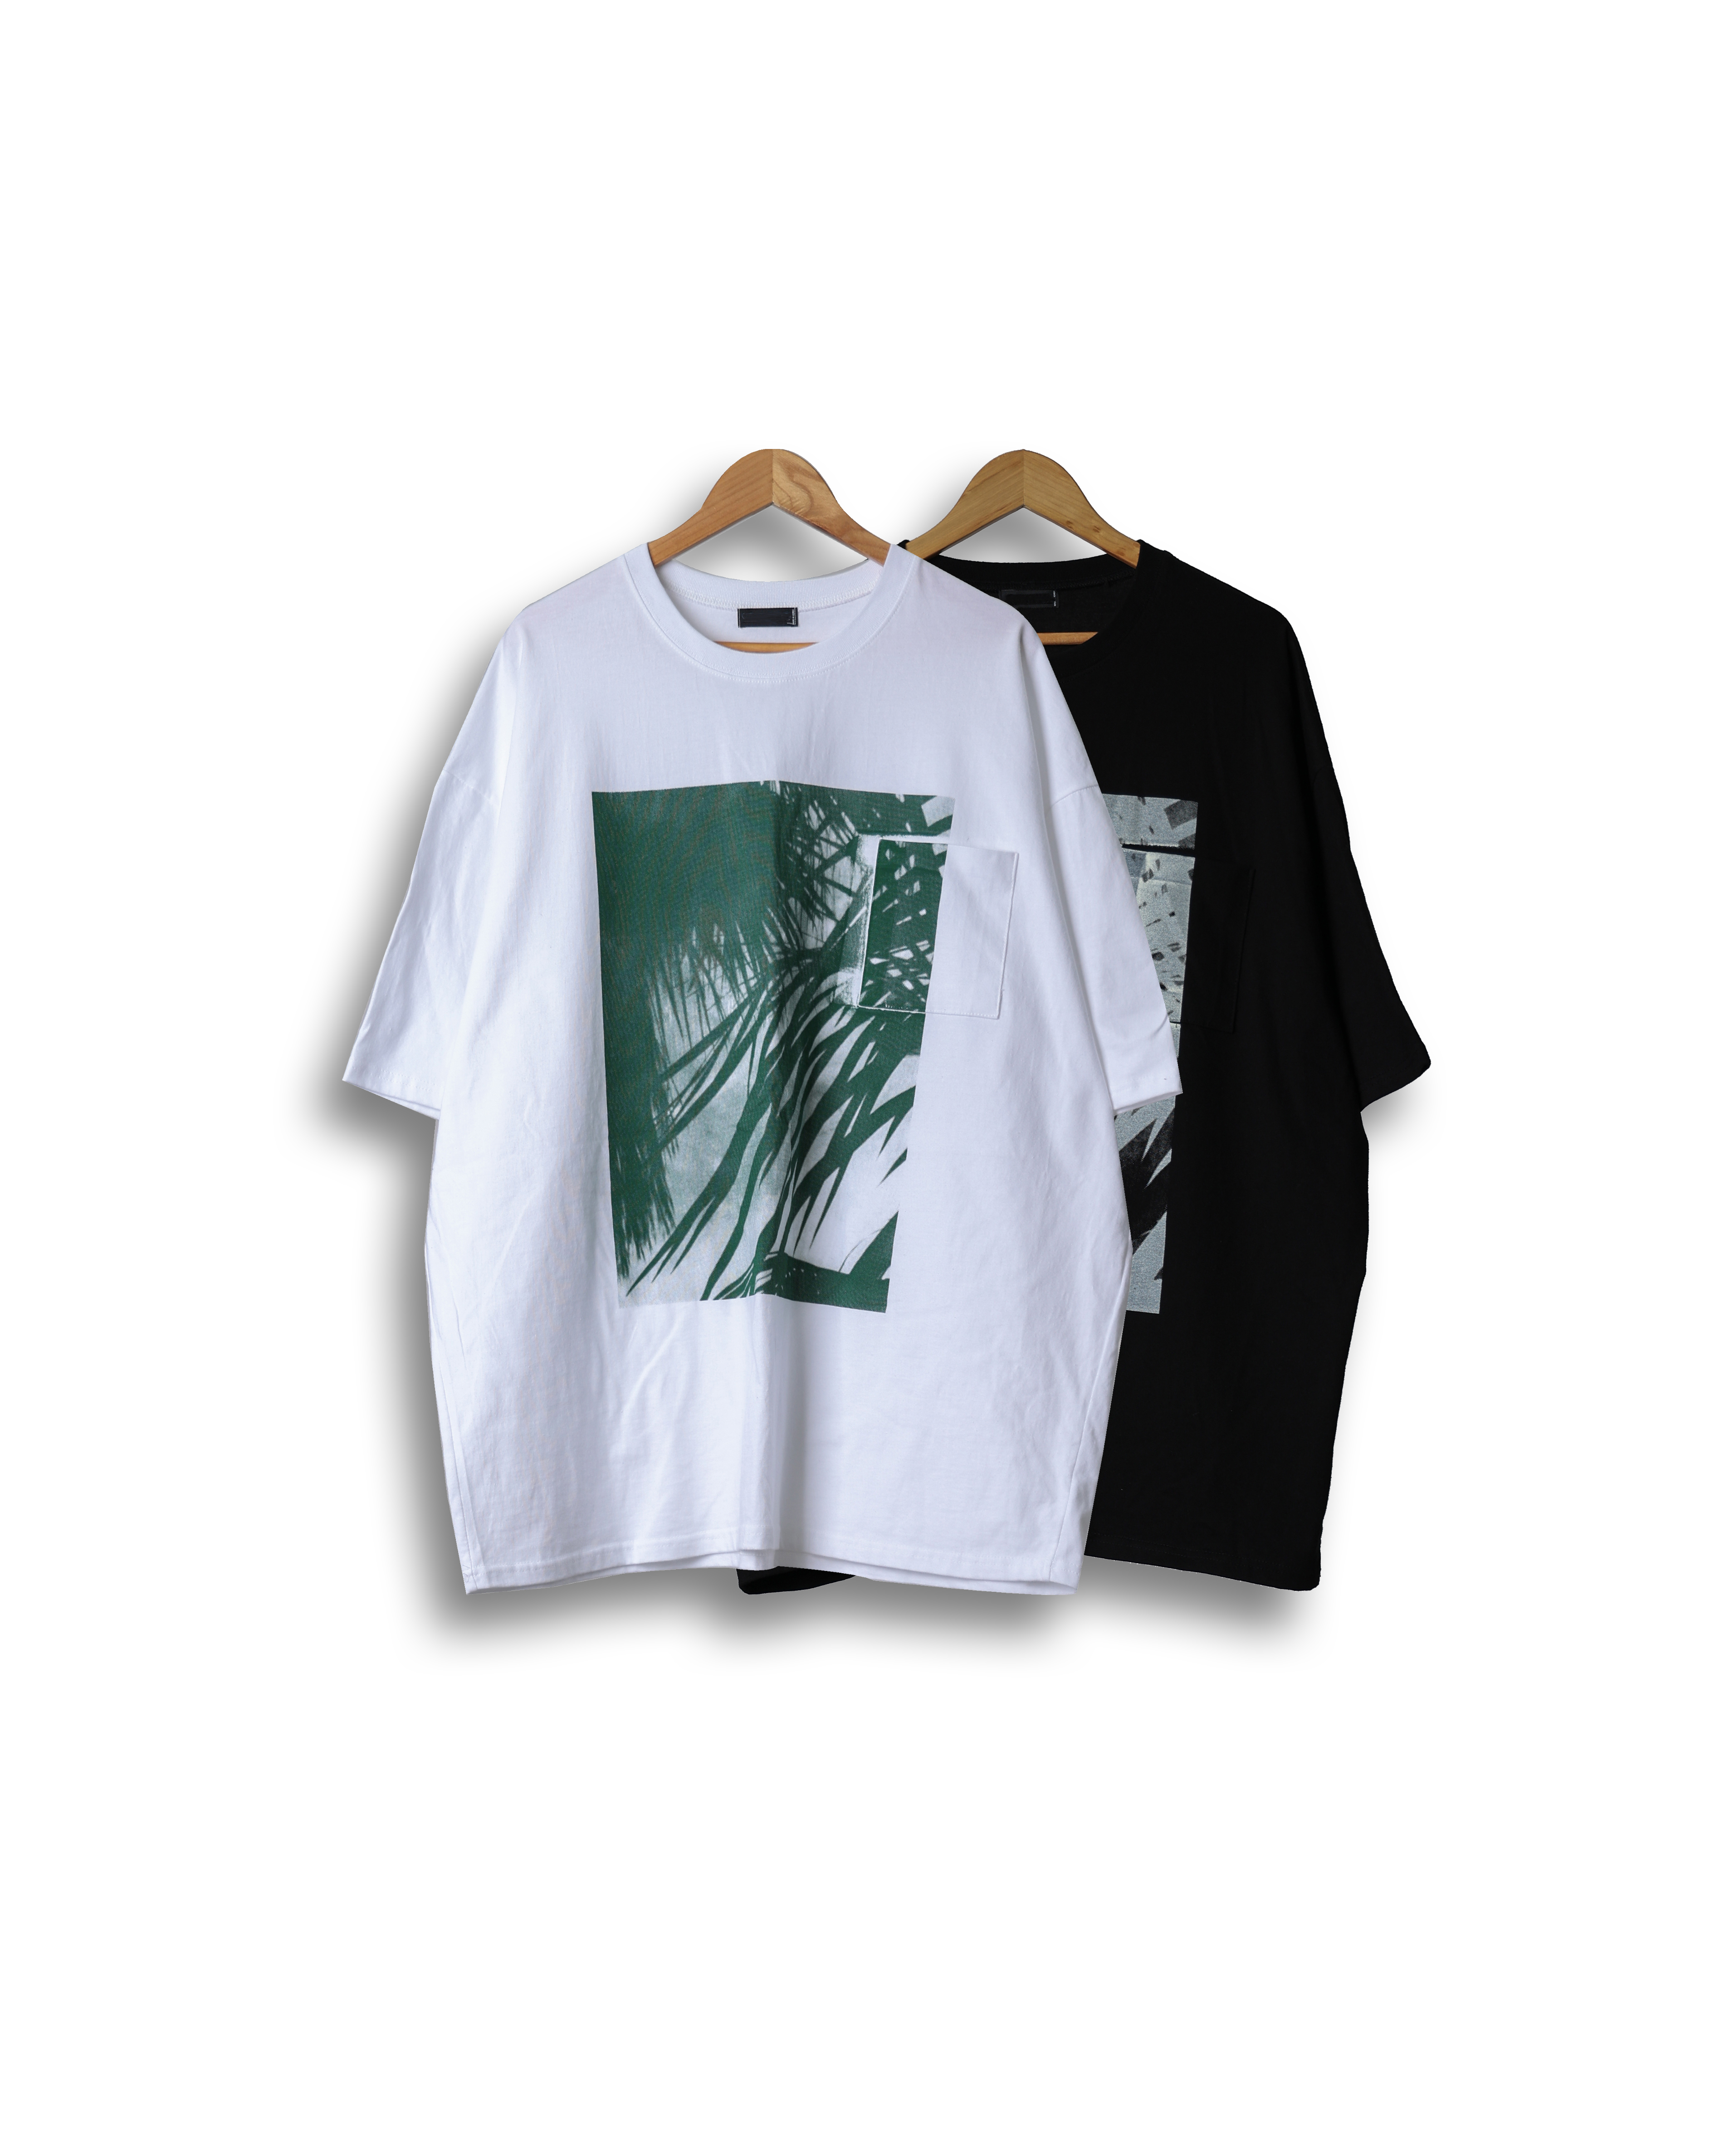 ONOFF Leaf Printed Pocket T Shirts (Black/White)